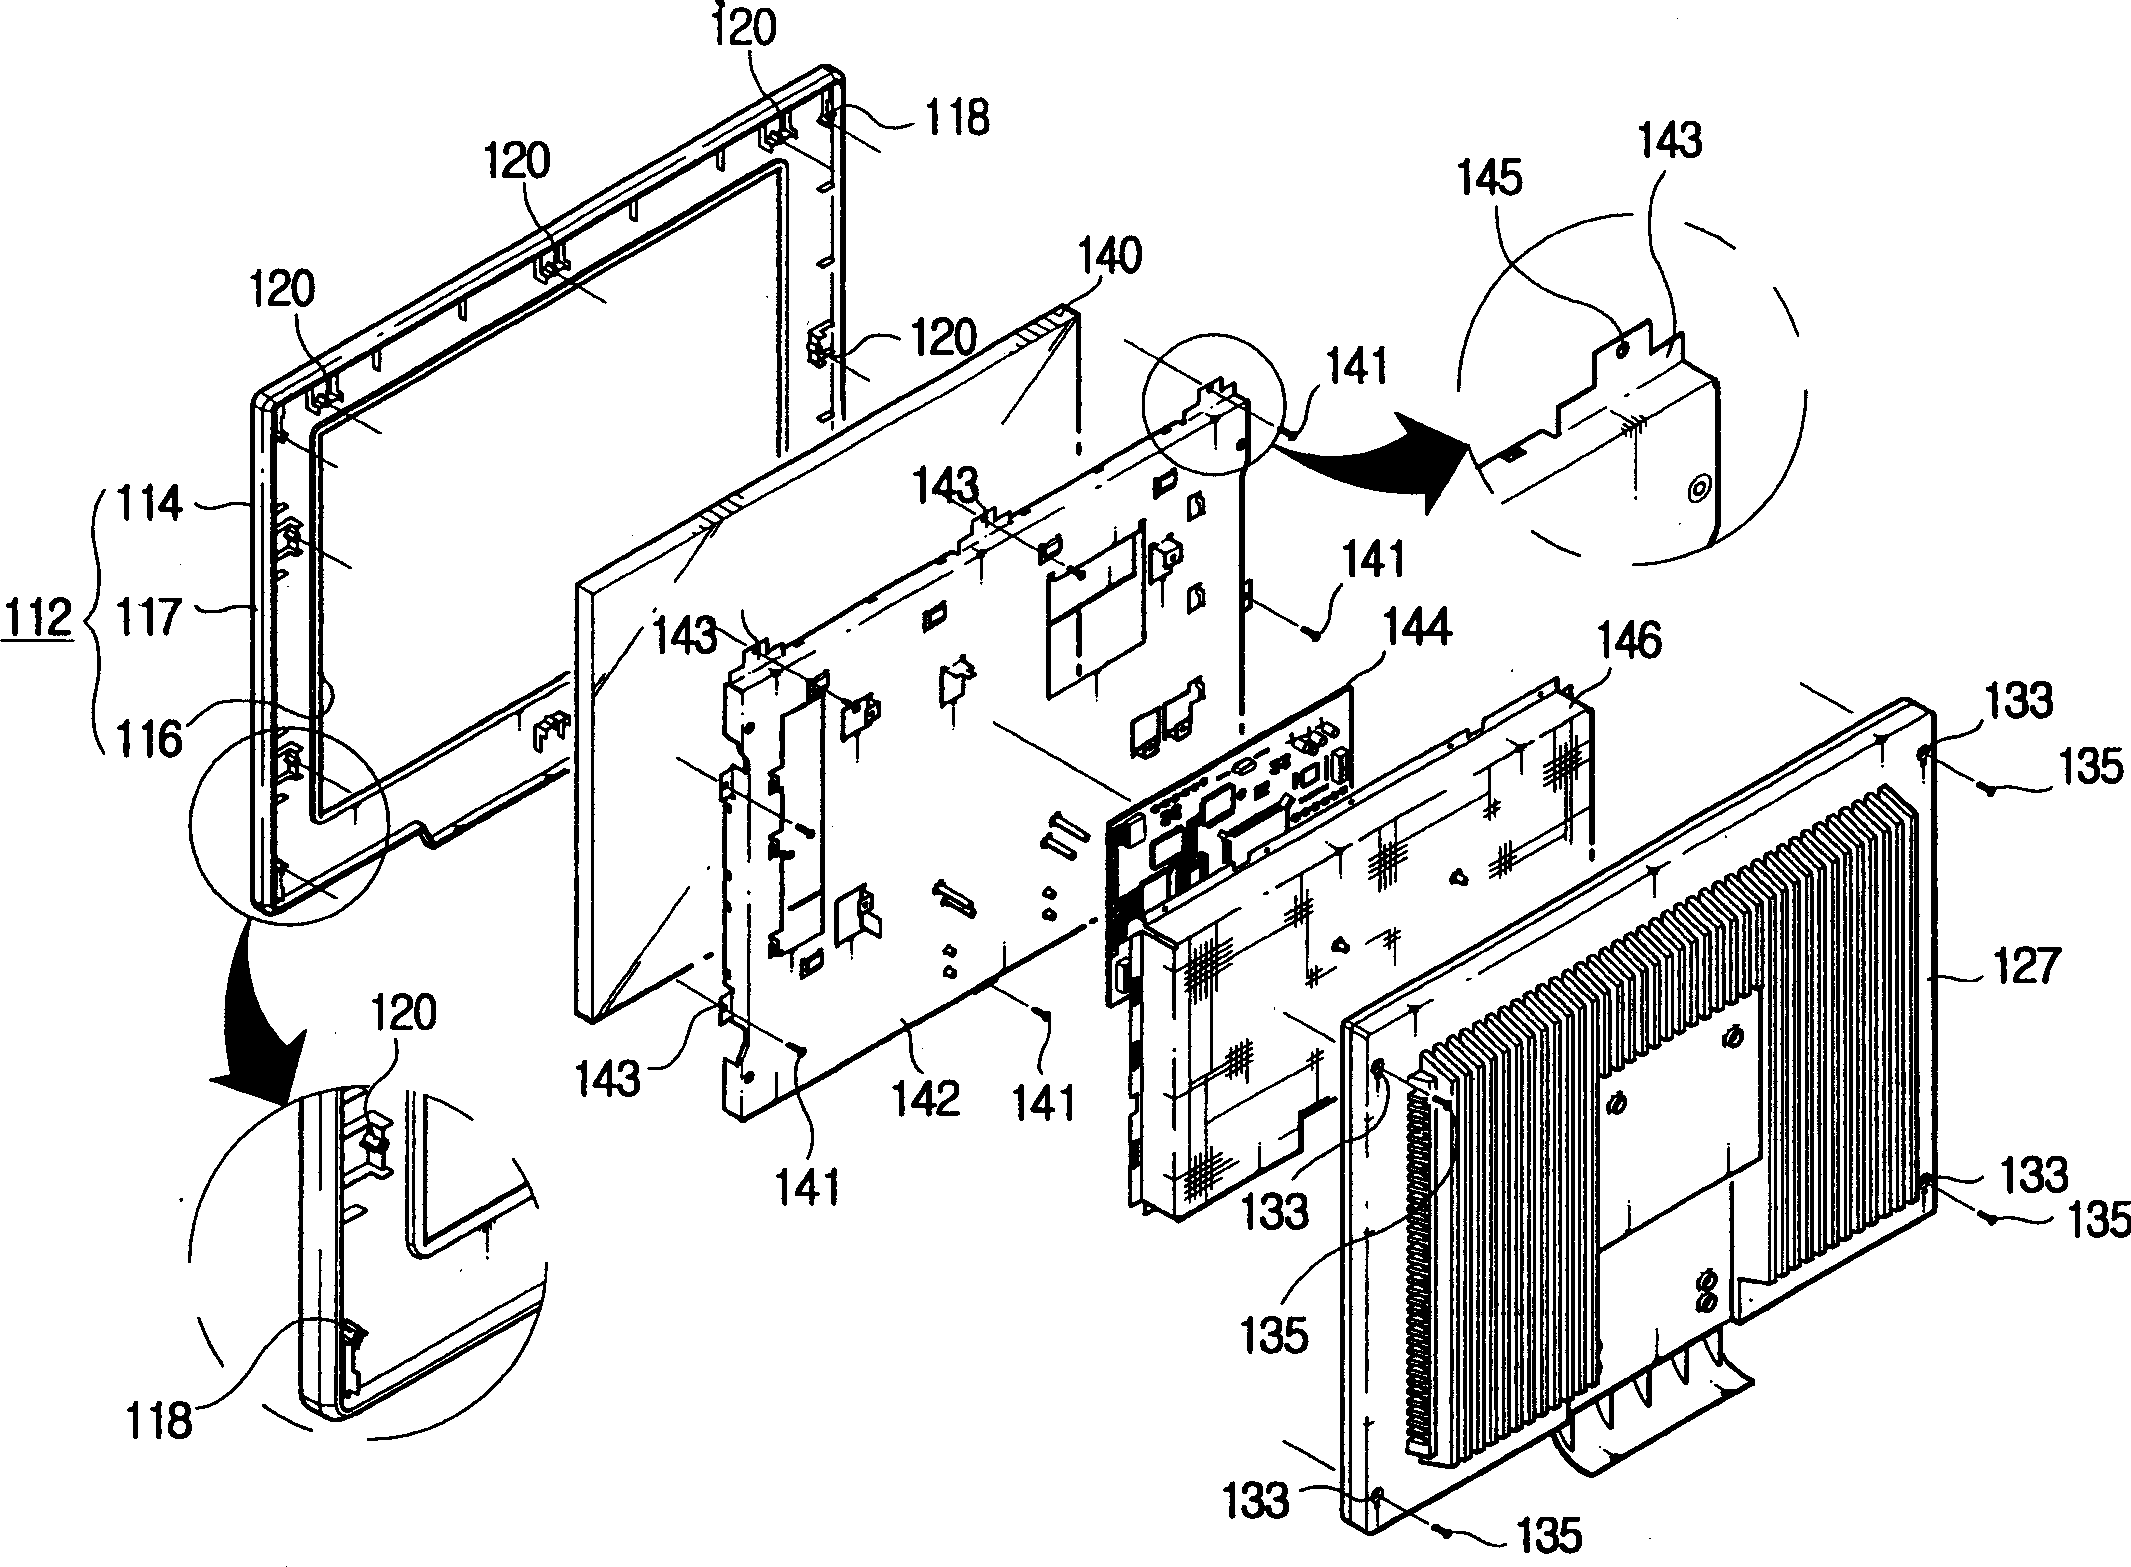 Display apparatus